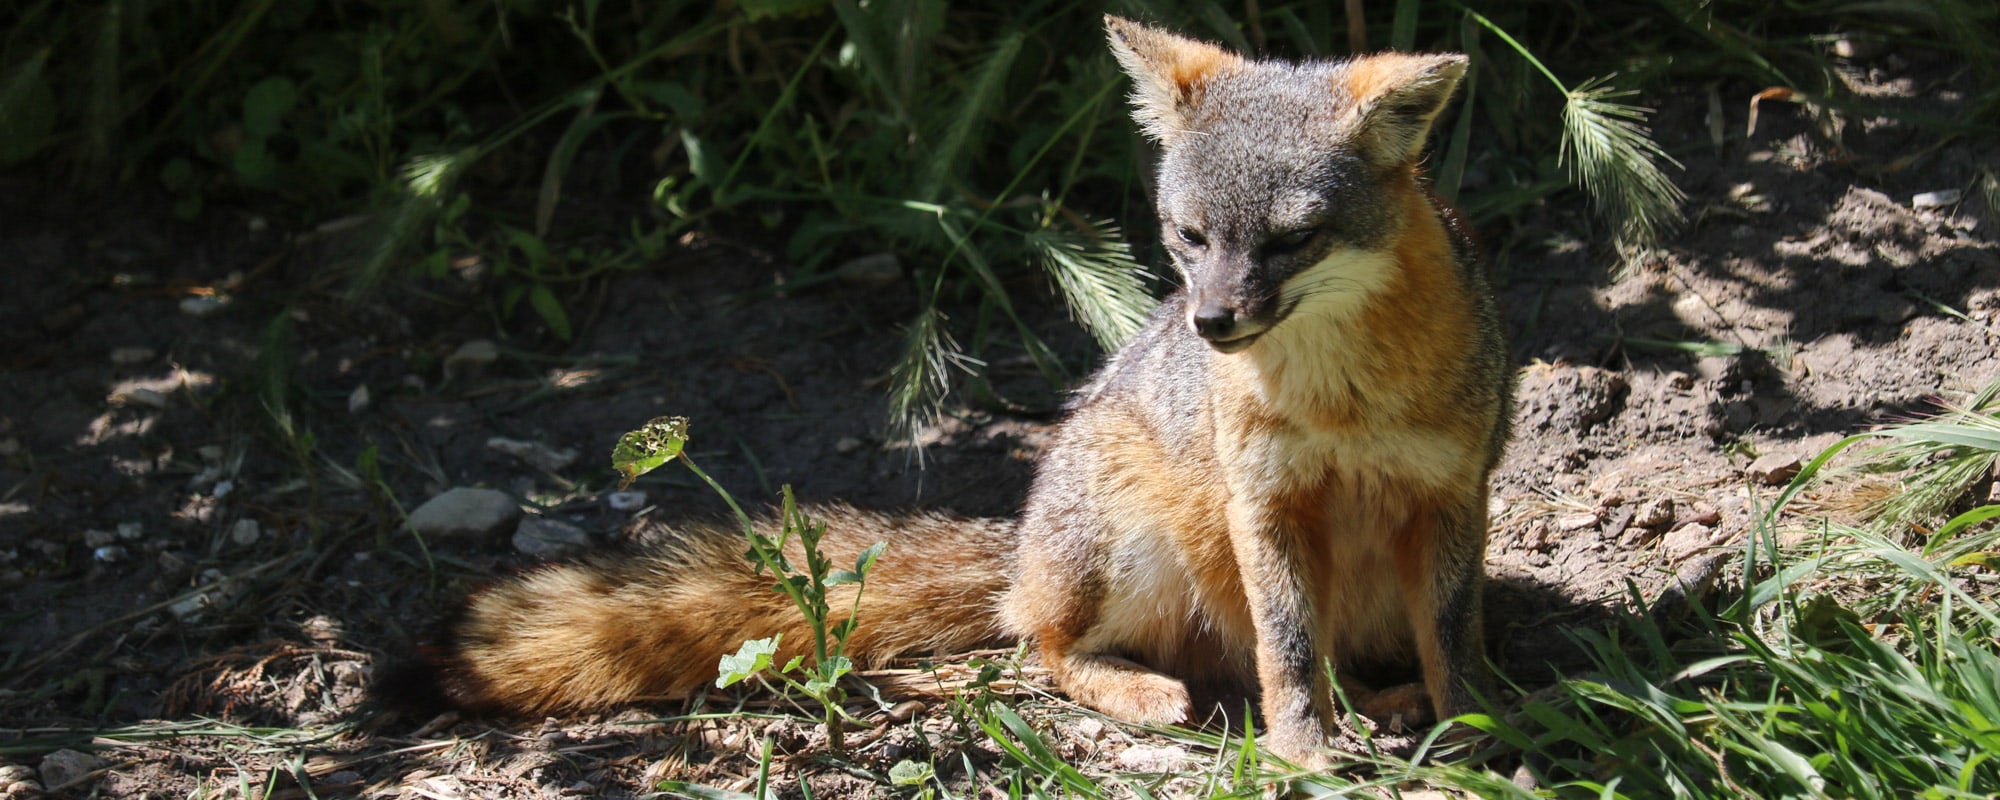 Channel Islands National Park - Banner Island Fox